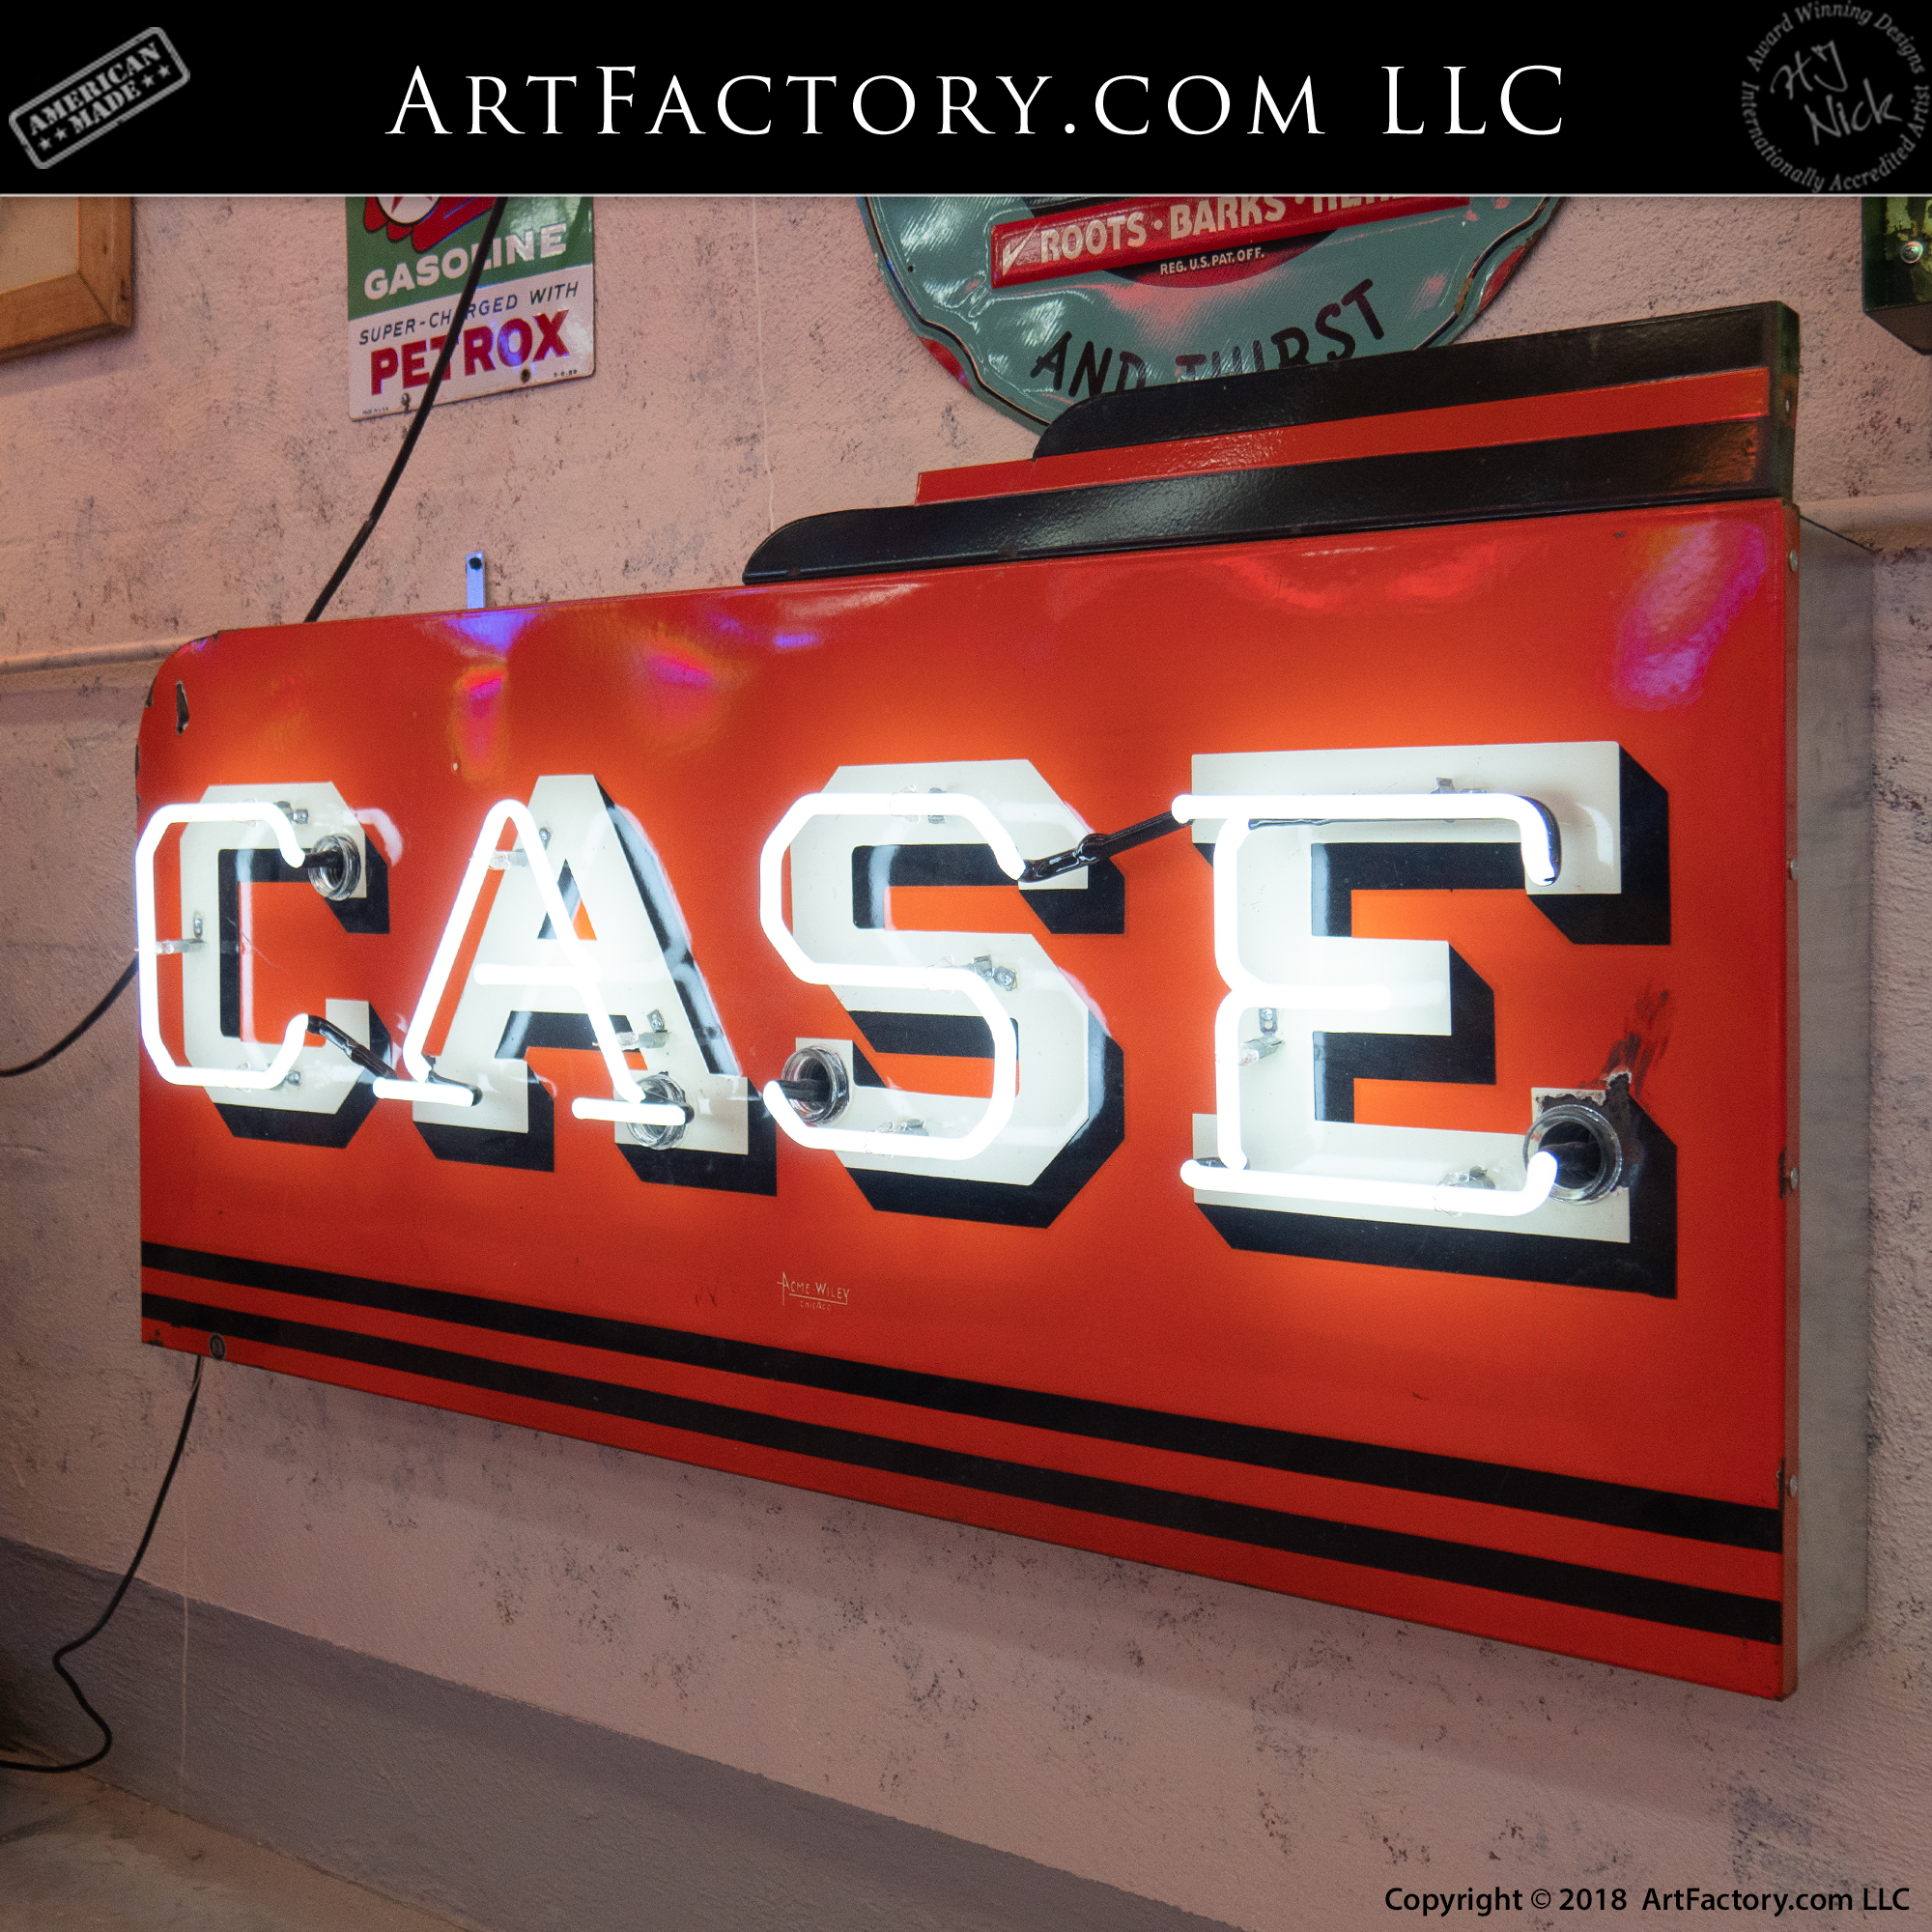 Vintage Rare Case Classic Neon Sign